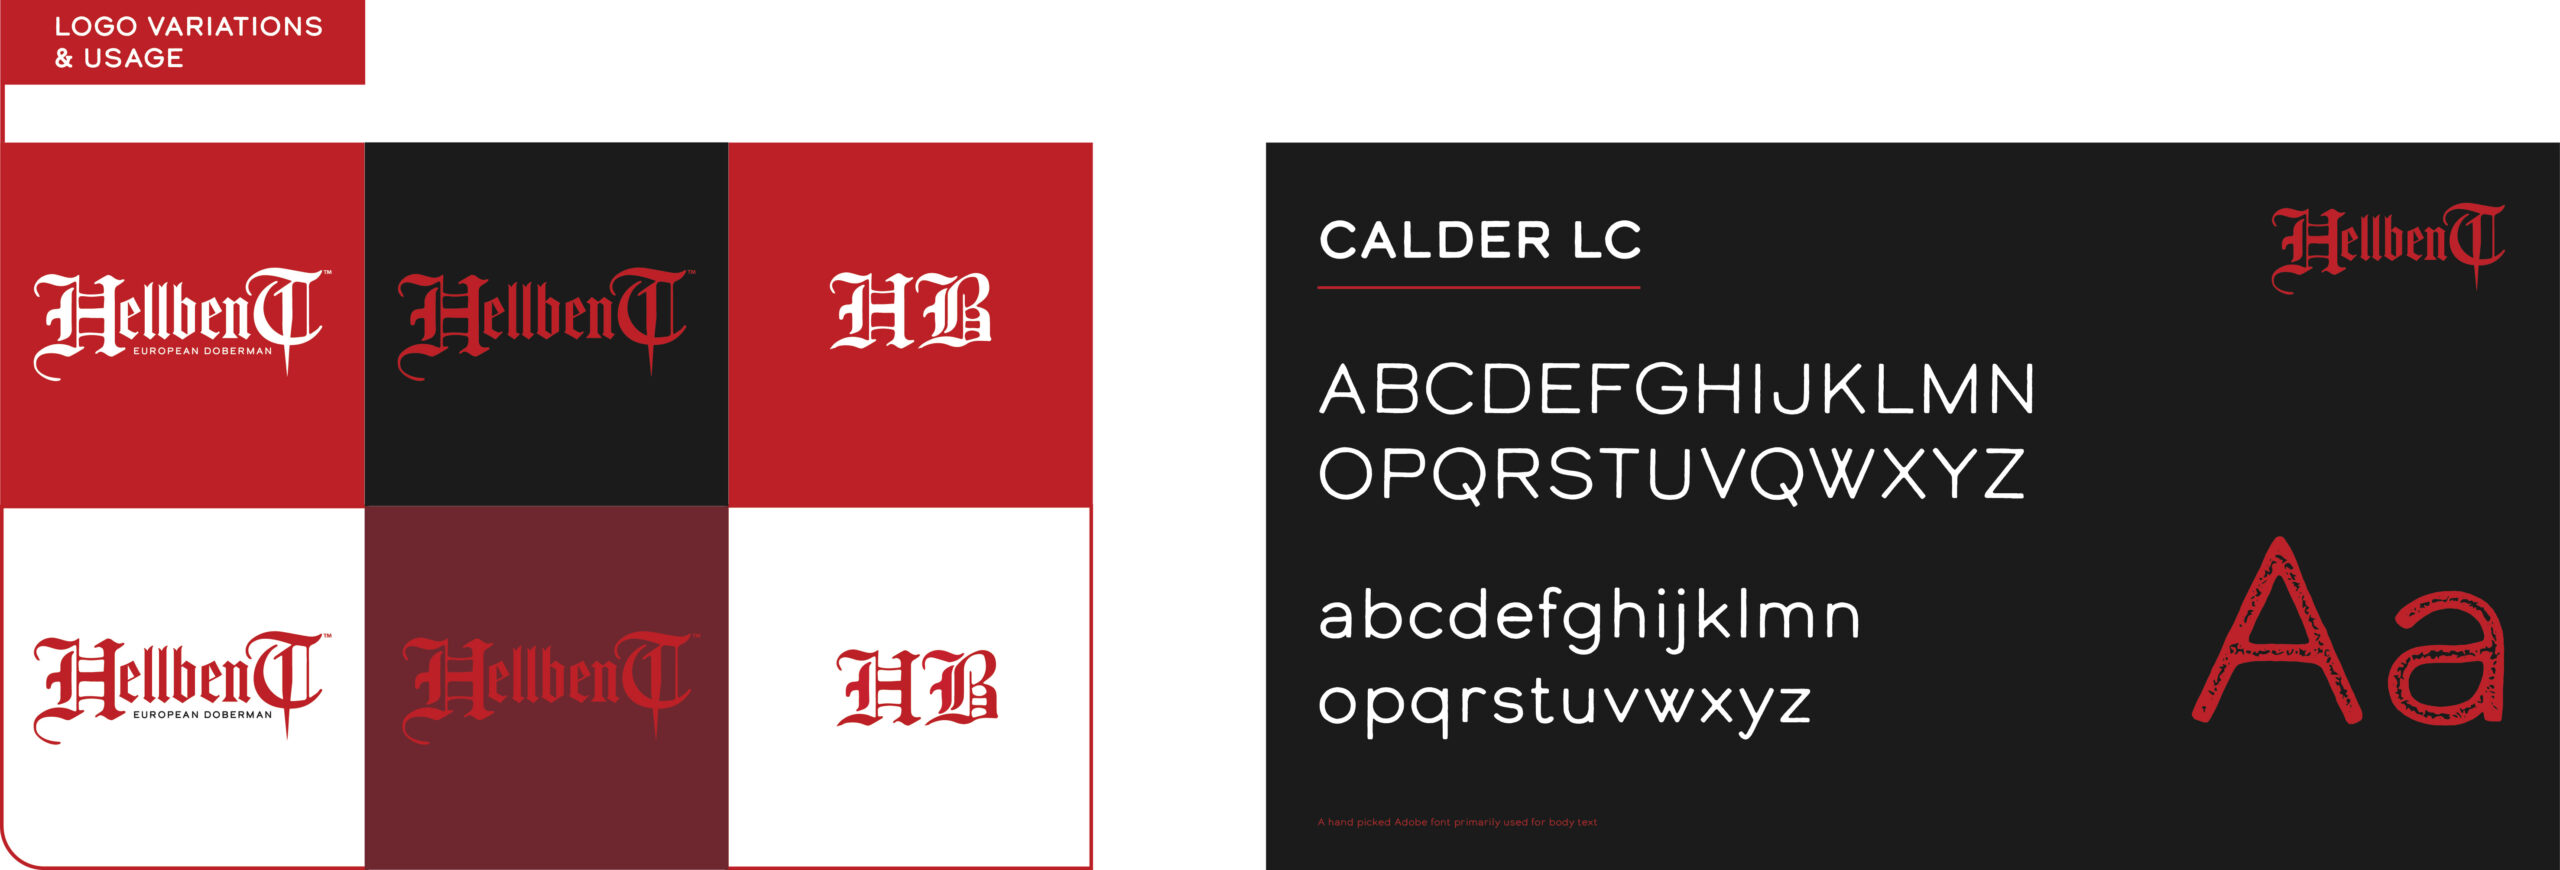 Calder-Typeface-and-Logos